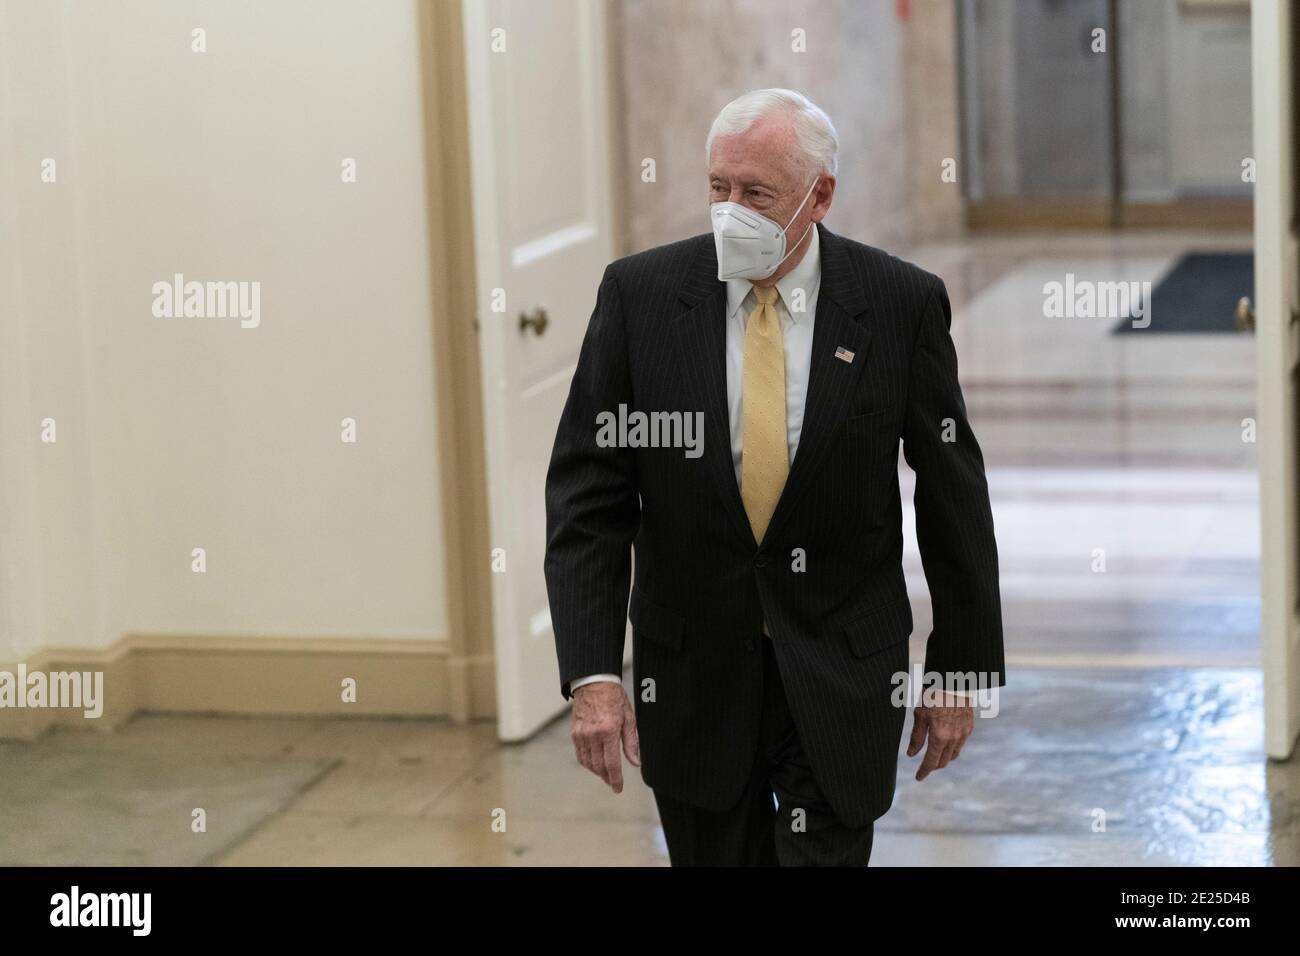 Washington DC - der Mehrheitsführer des Hauses Steny Hoyer kommt auf dem Capitol Hill an. Foto: Chris Kleponis/Sipa, USA. Januar 2021. Quelle: SIPA USA/Alamy Live News Stockfoto